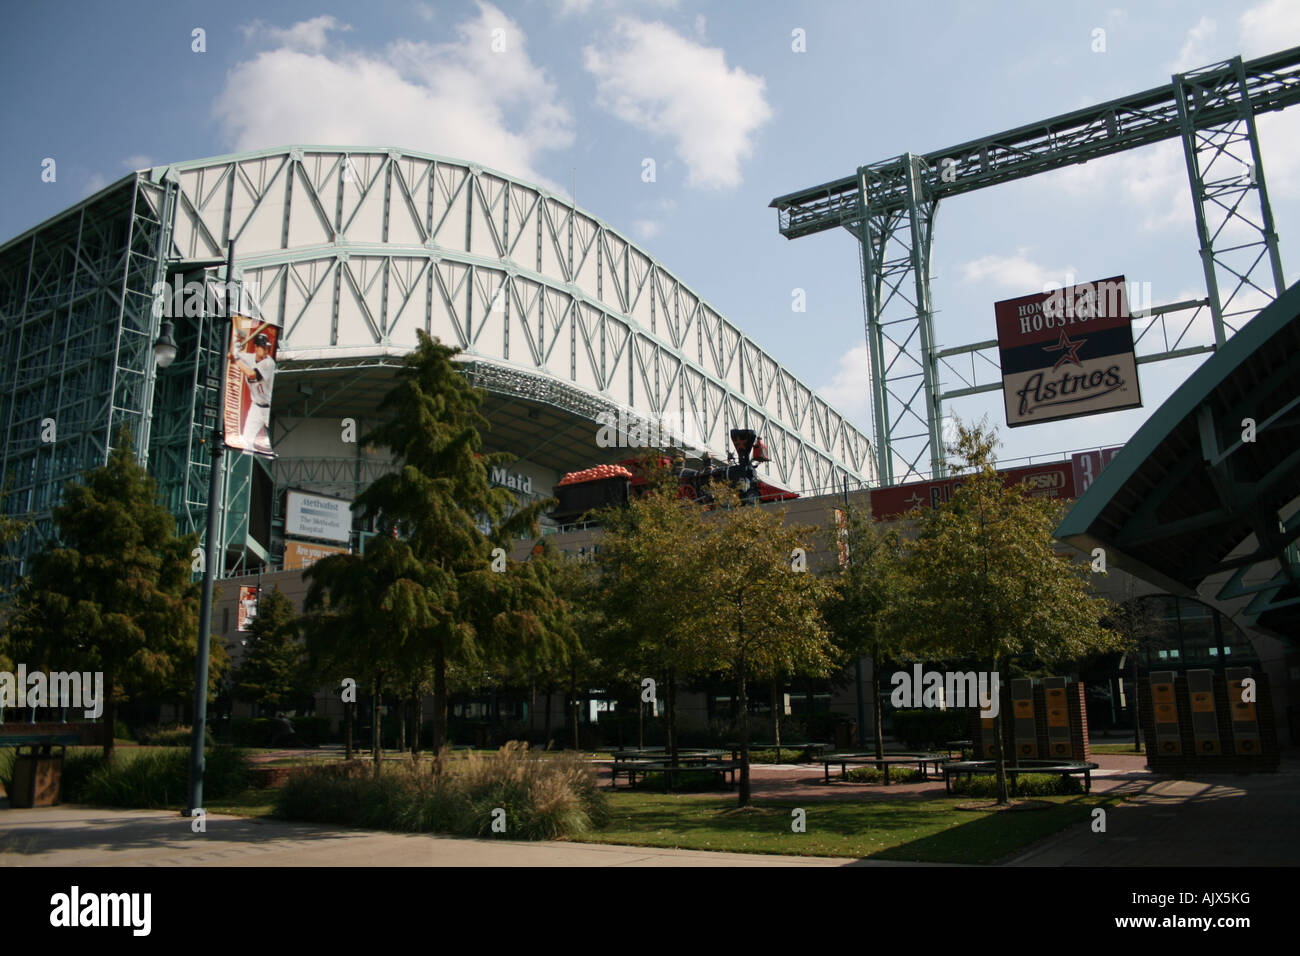 Exterior view of Minute Maid Park Houston baseball stadium for